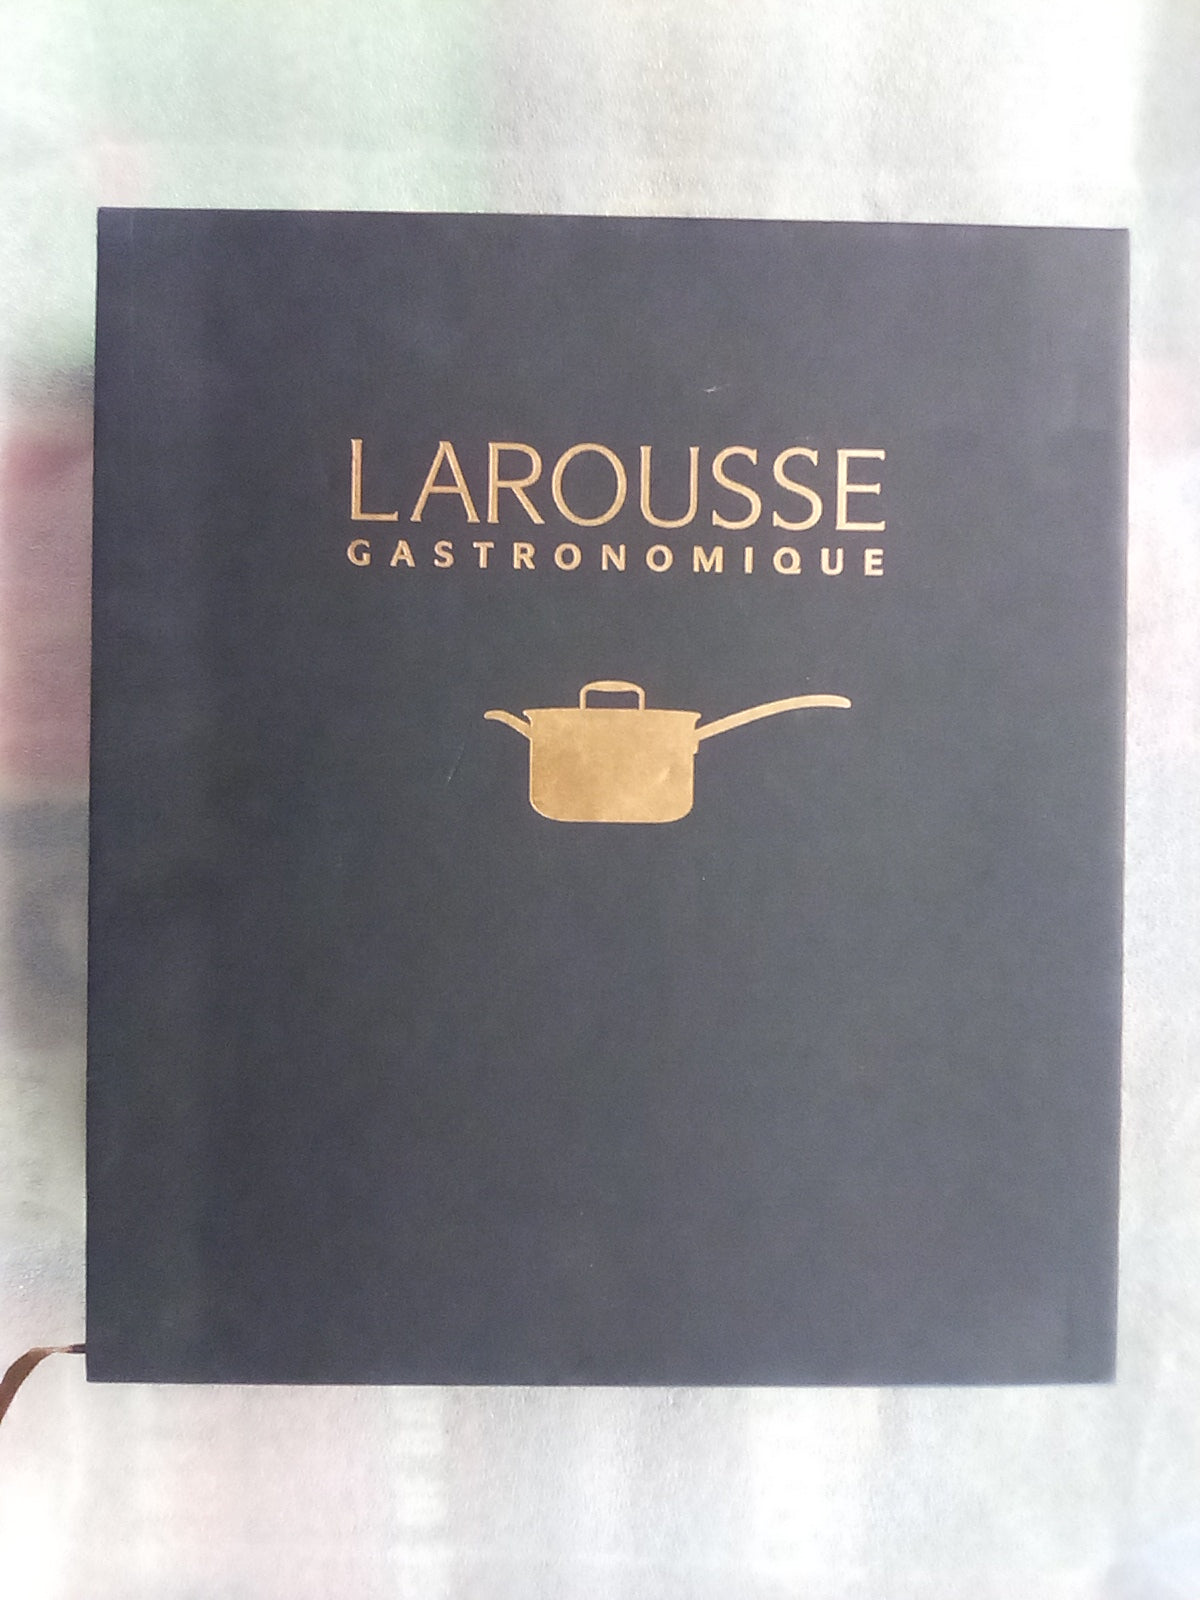 Larousse Gastronomique - 2009 edition in Slipcase